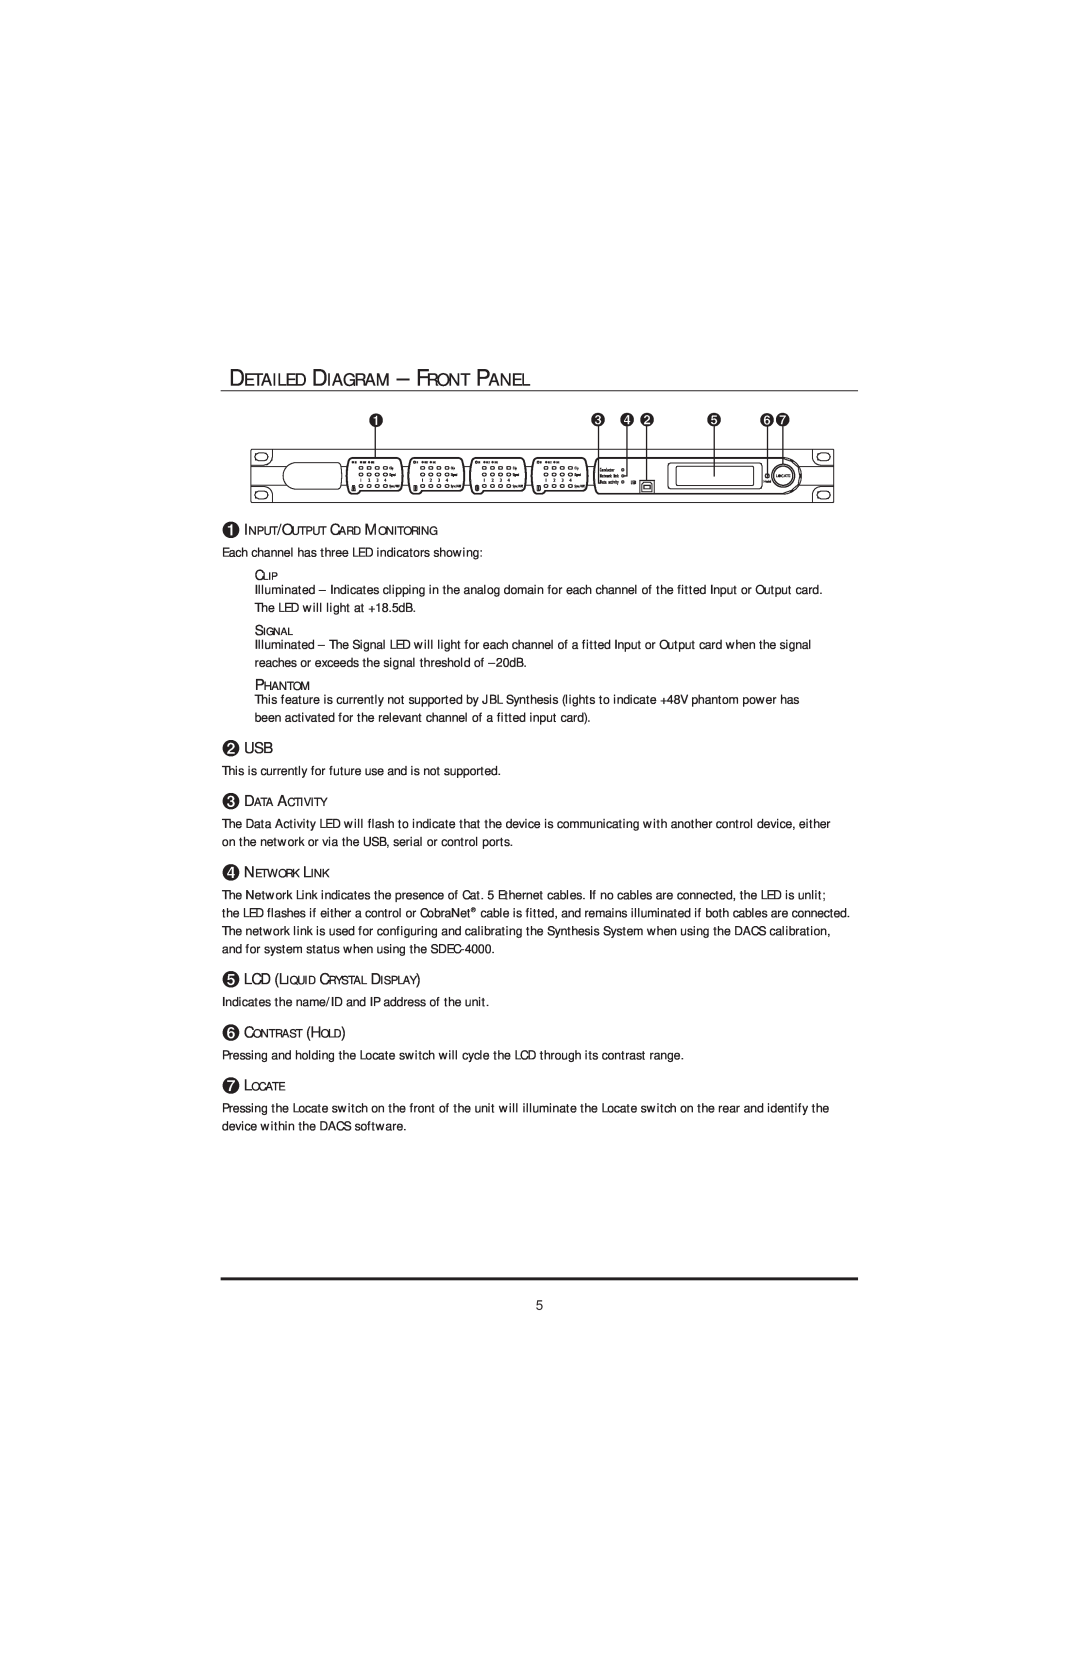 JBL SDEC-4000 manual Detailed Diagram - Front Panel 